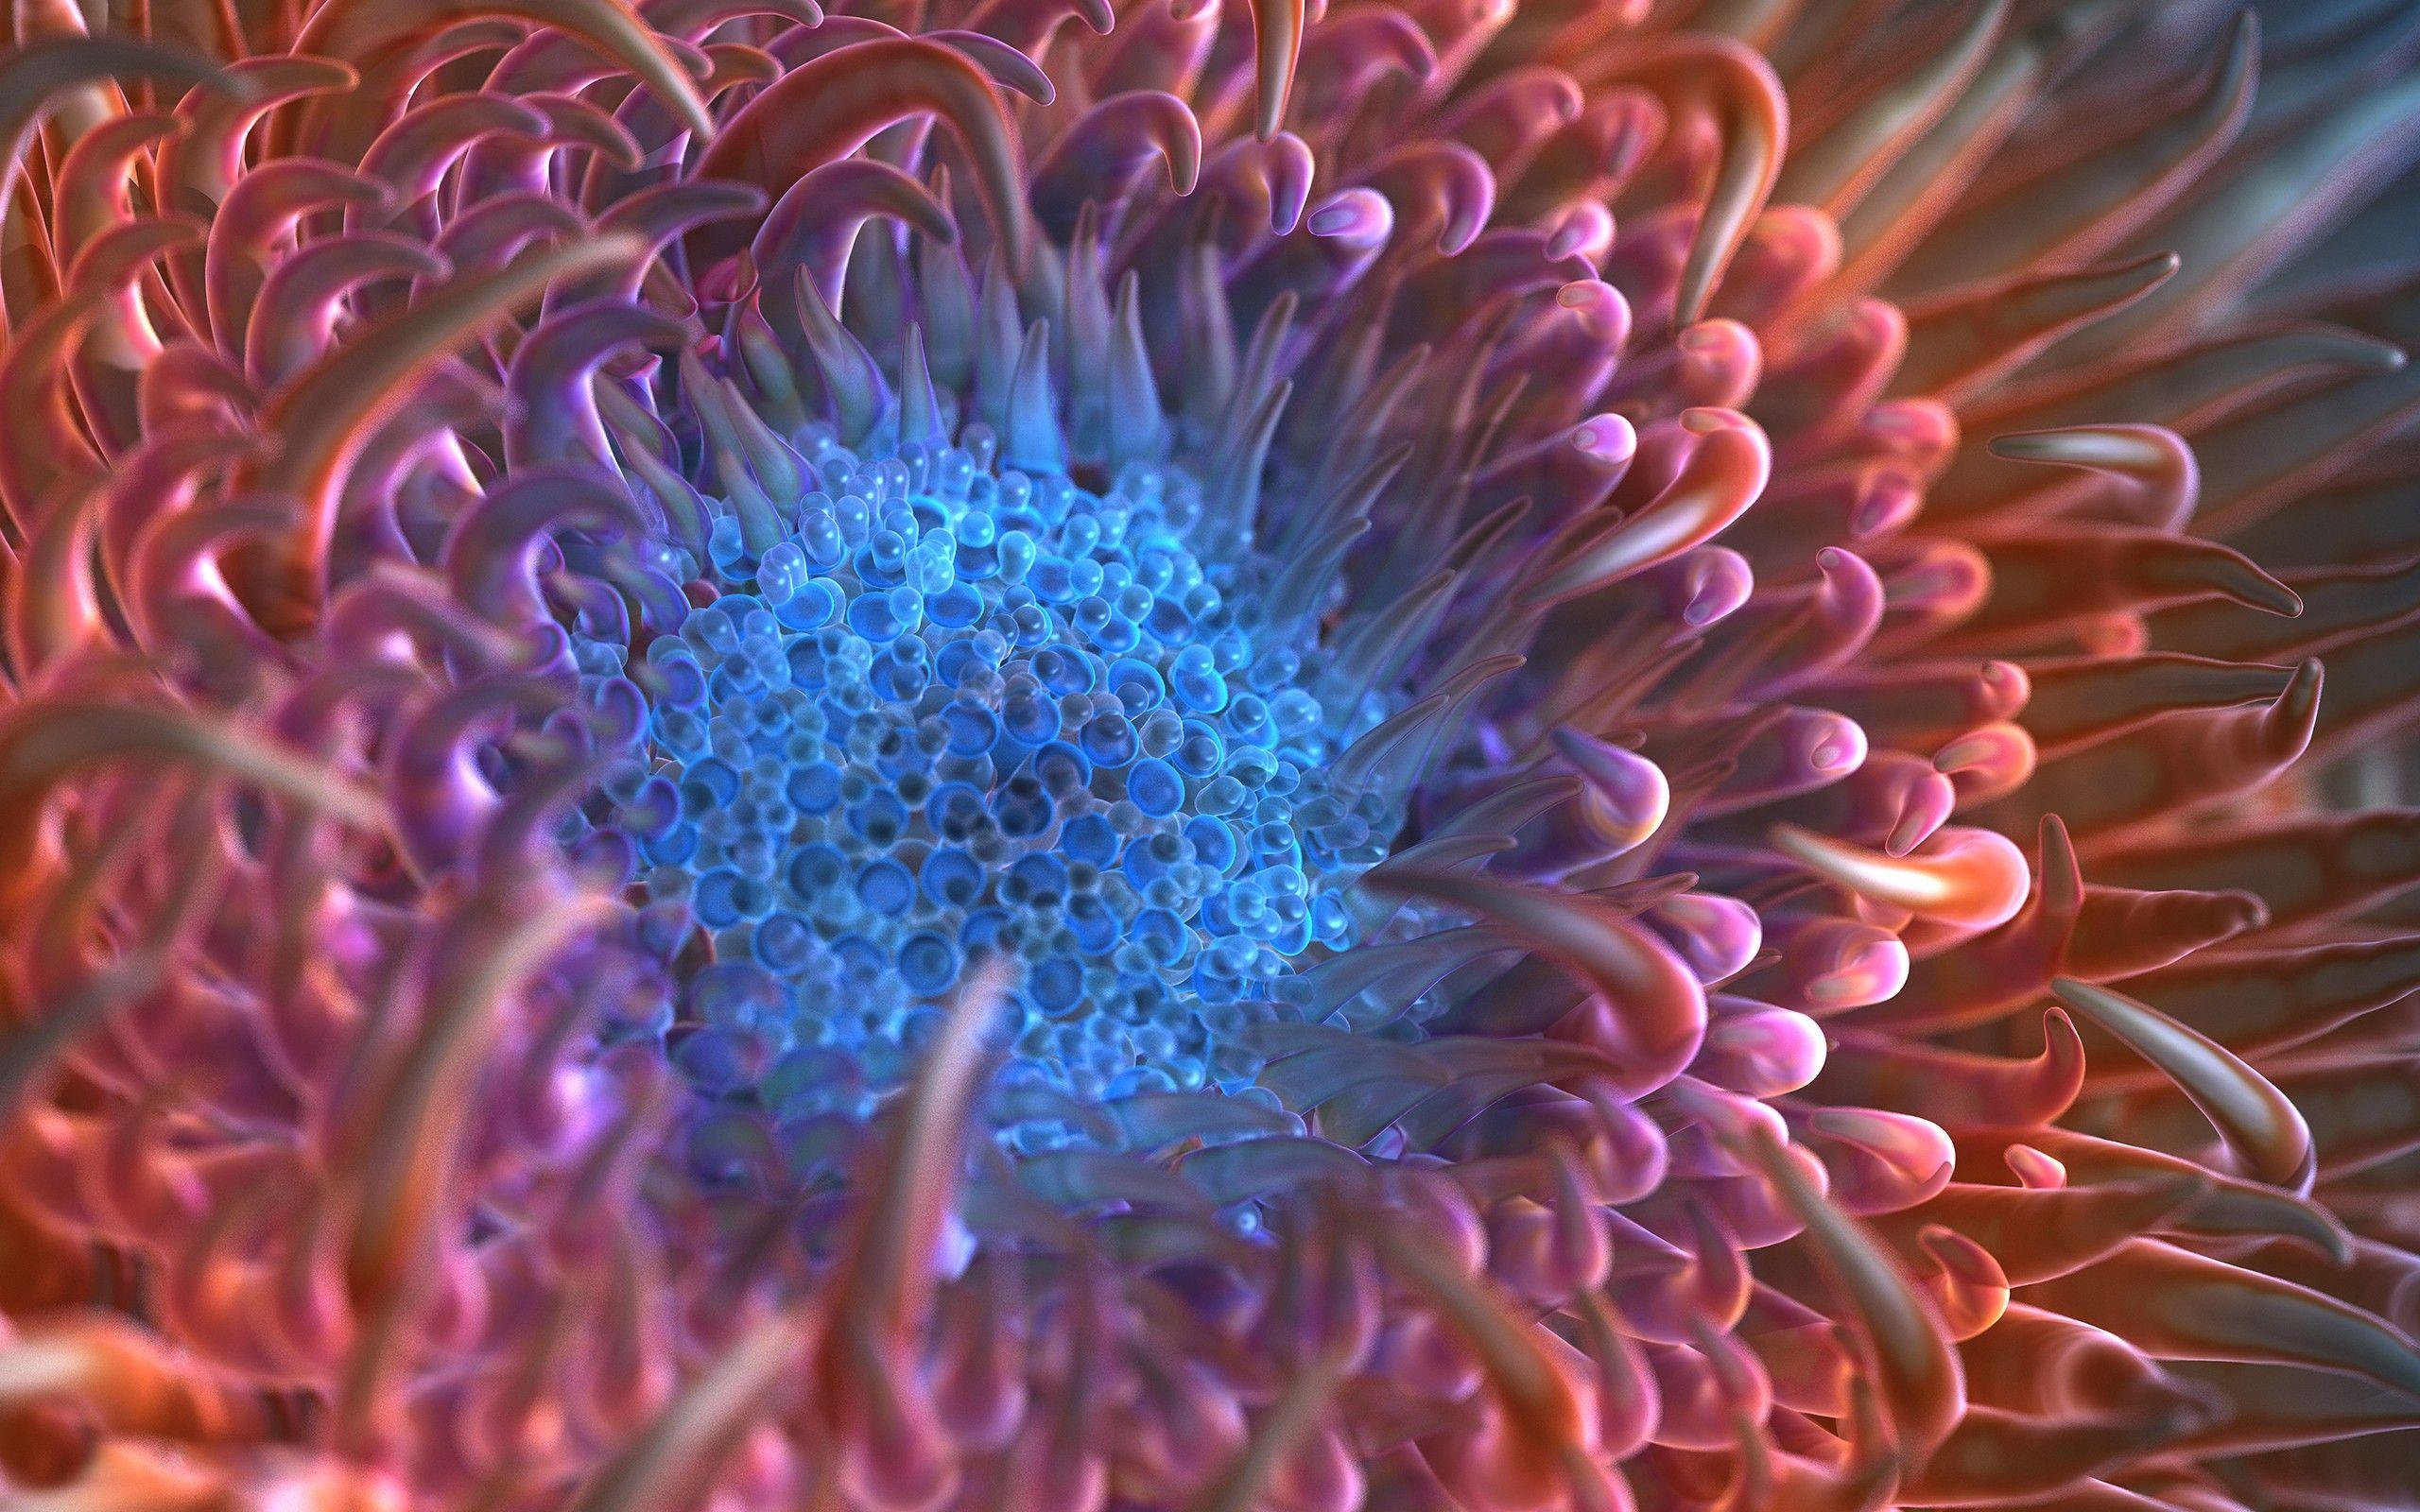 Digital Anemone Flower, HD Graphics, 4k Wallpaper, Image